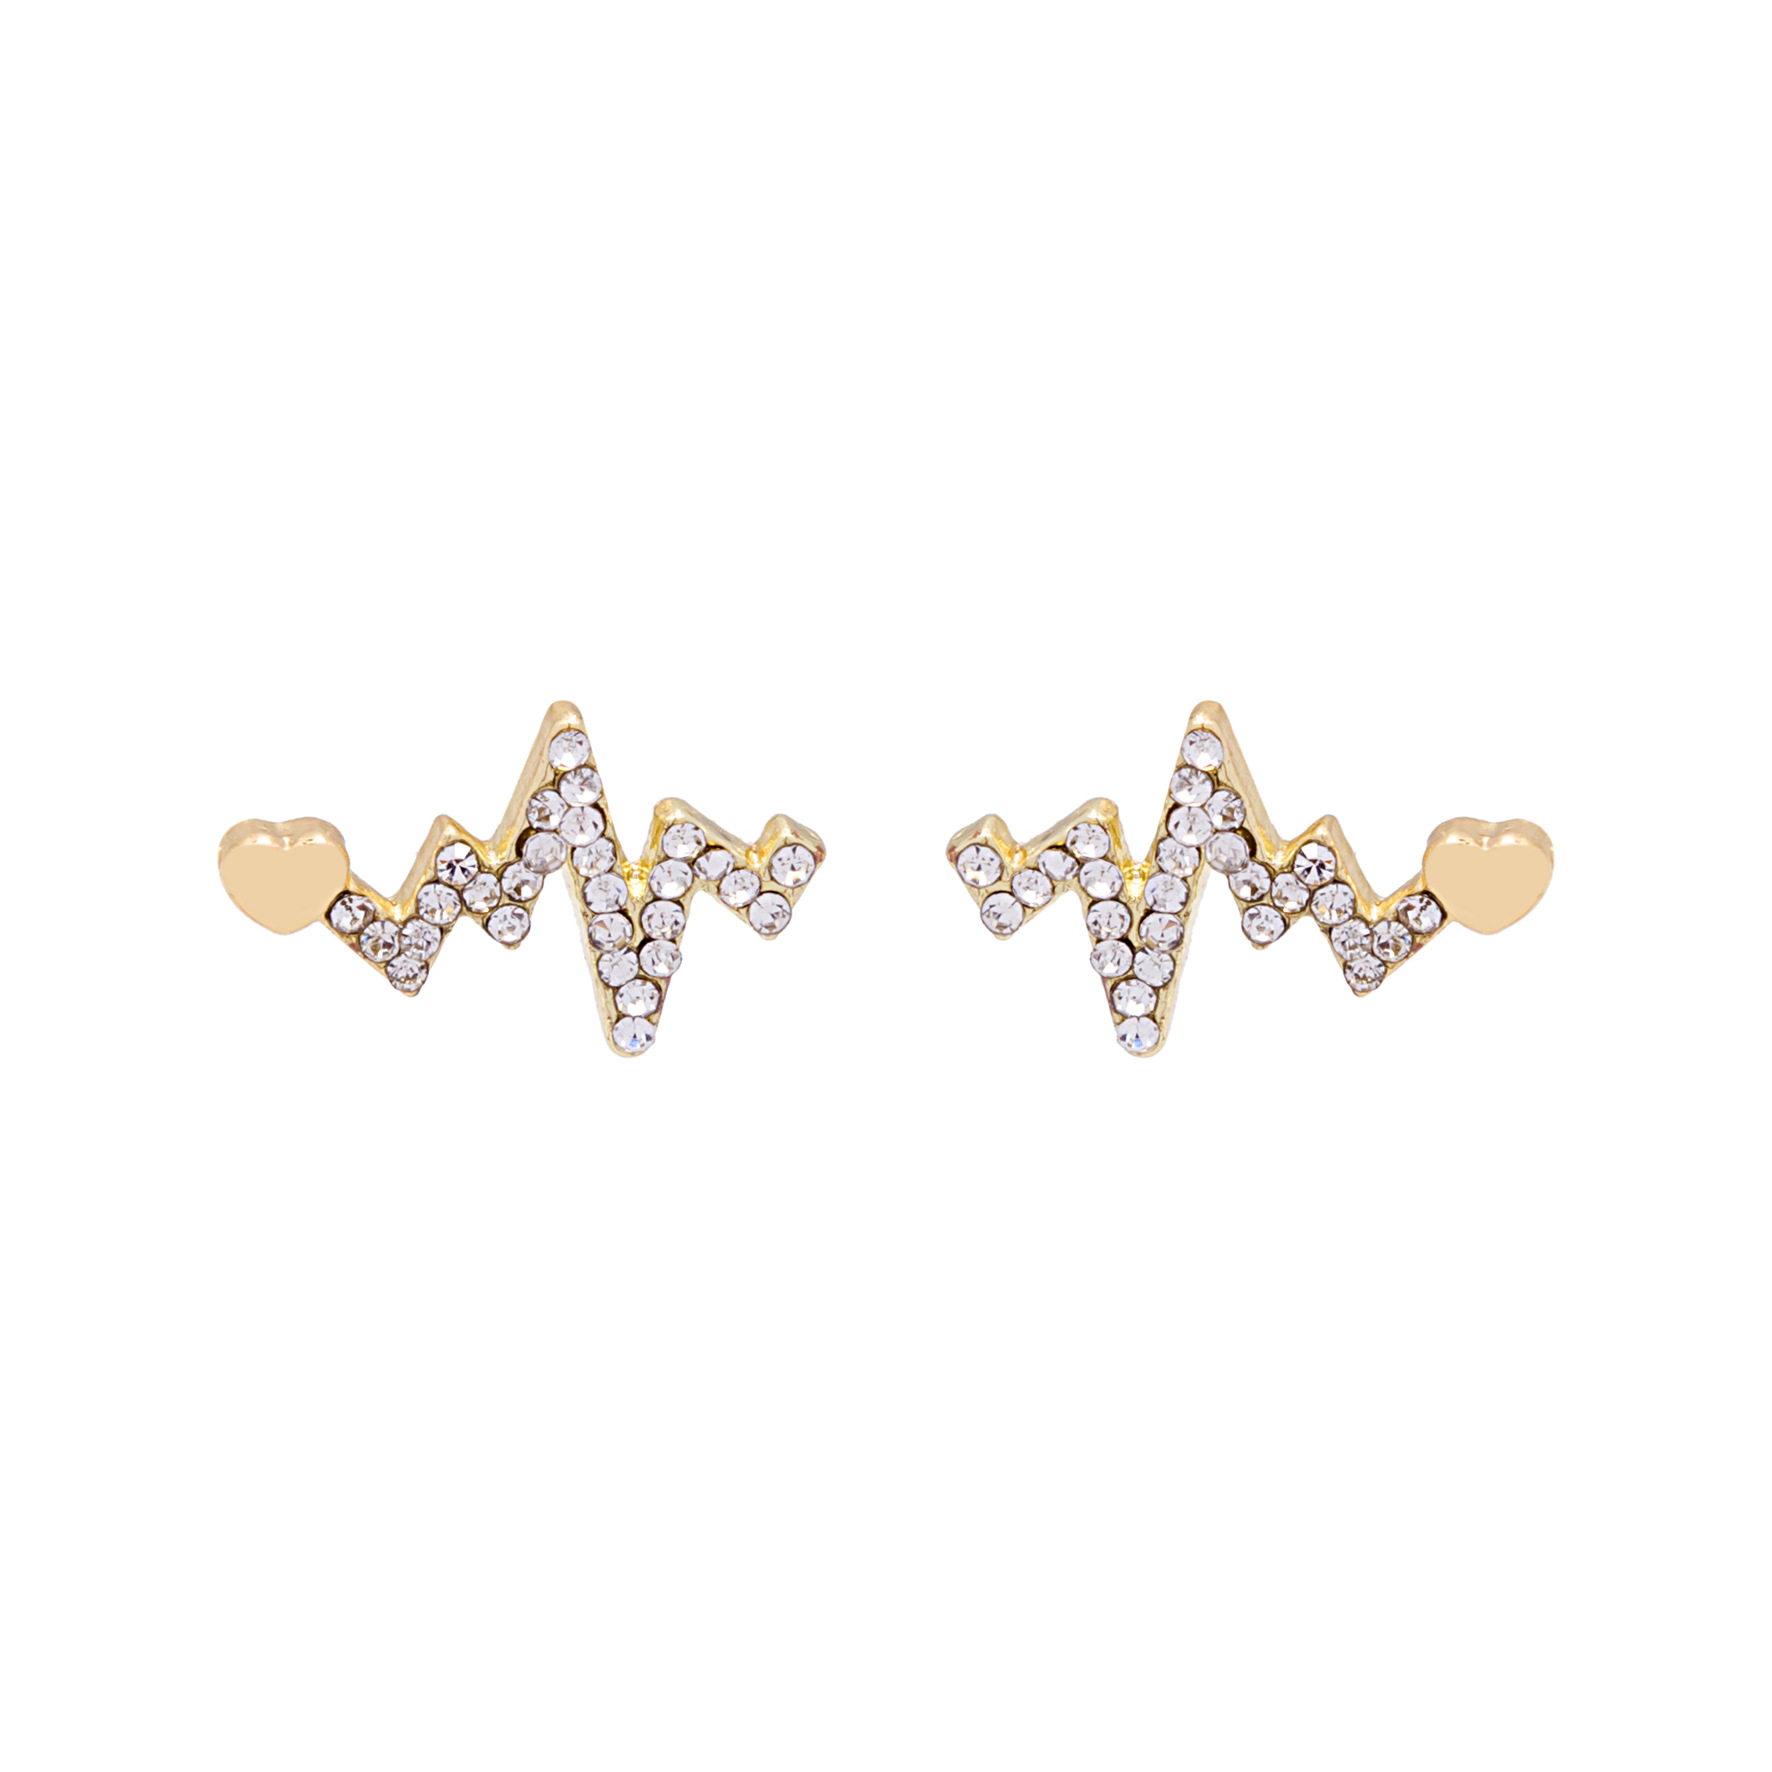 Silver Diamond Fashion Temperament Love Earrings Electrocardiogram Japan and Korea Cupid Asymmetrical Arrow Hanging Diamond Square Pearl Earrings Geometry Trend Earrings